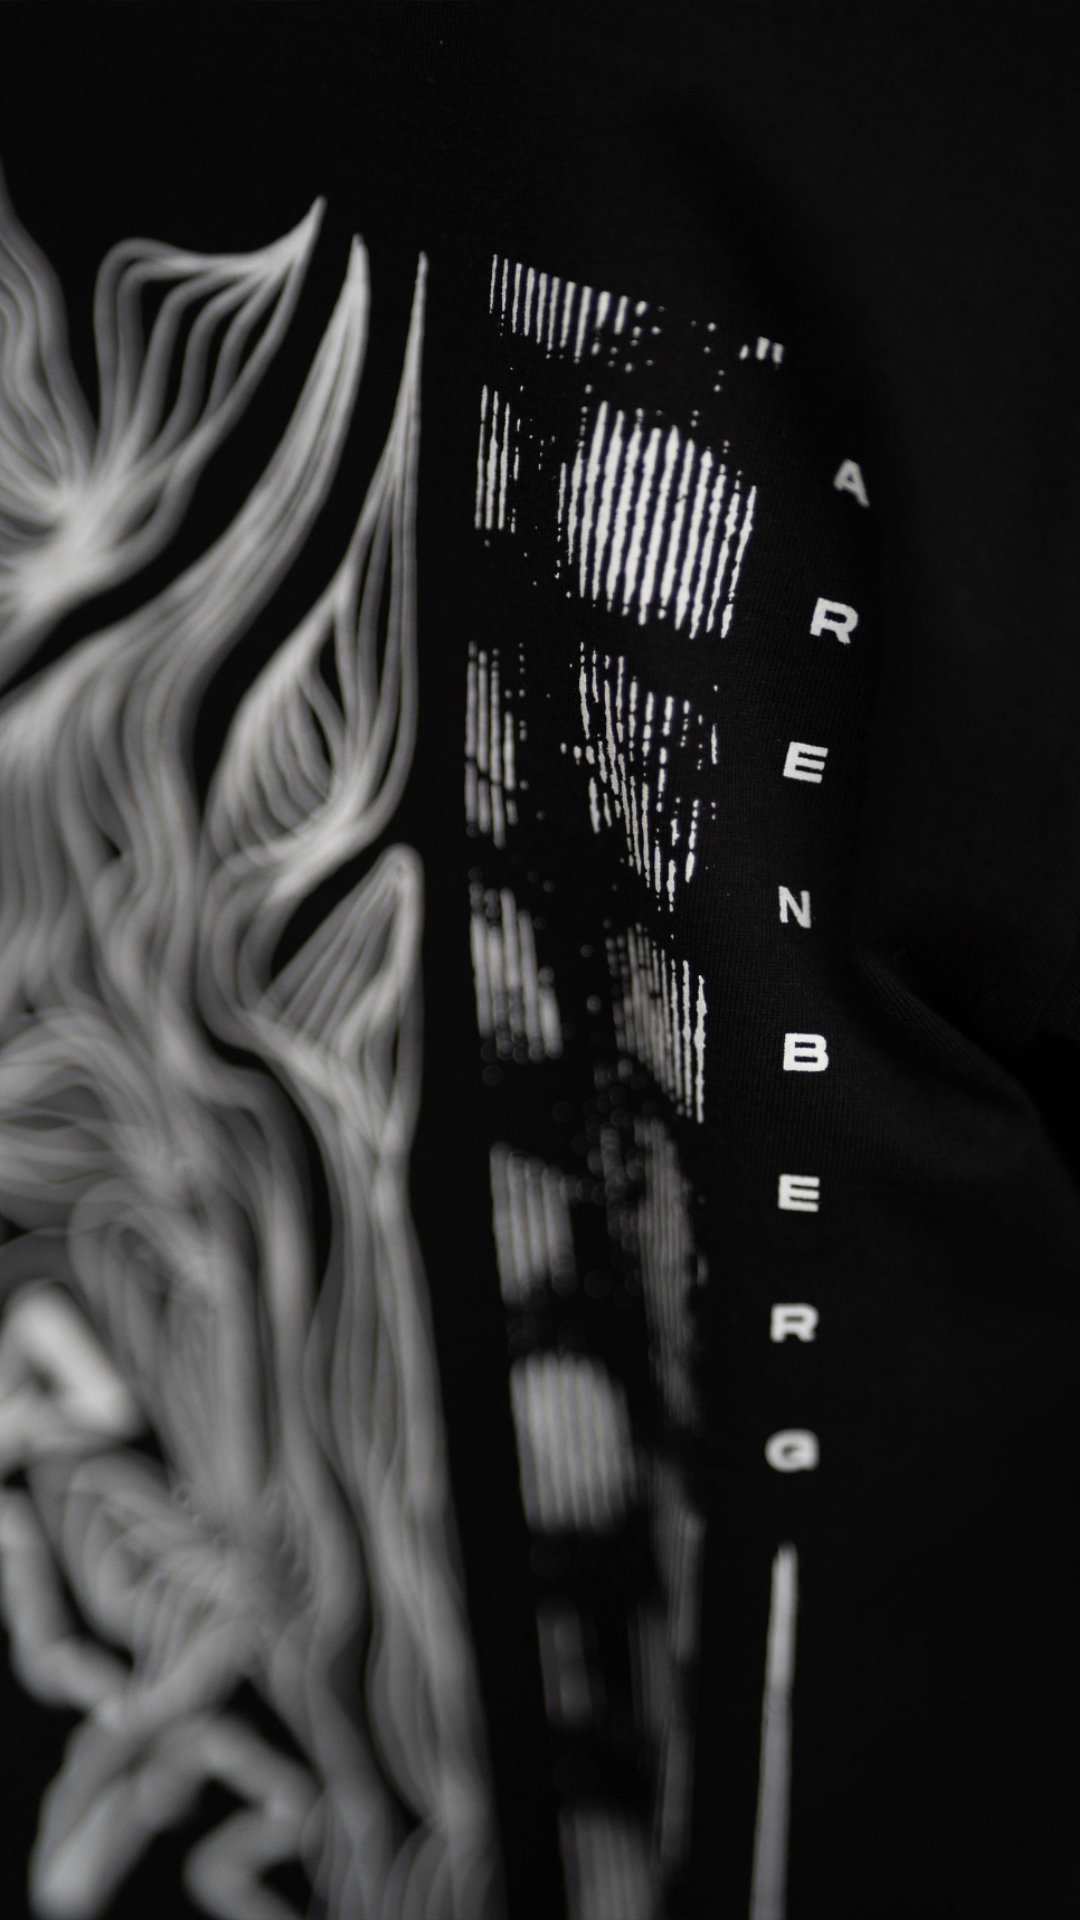 arenberg detail on tshirt